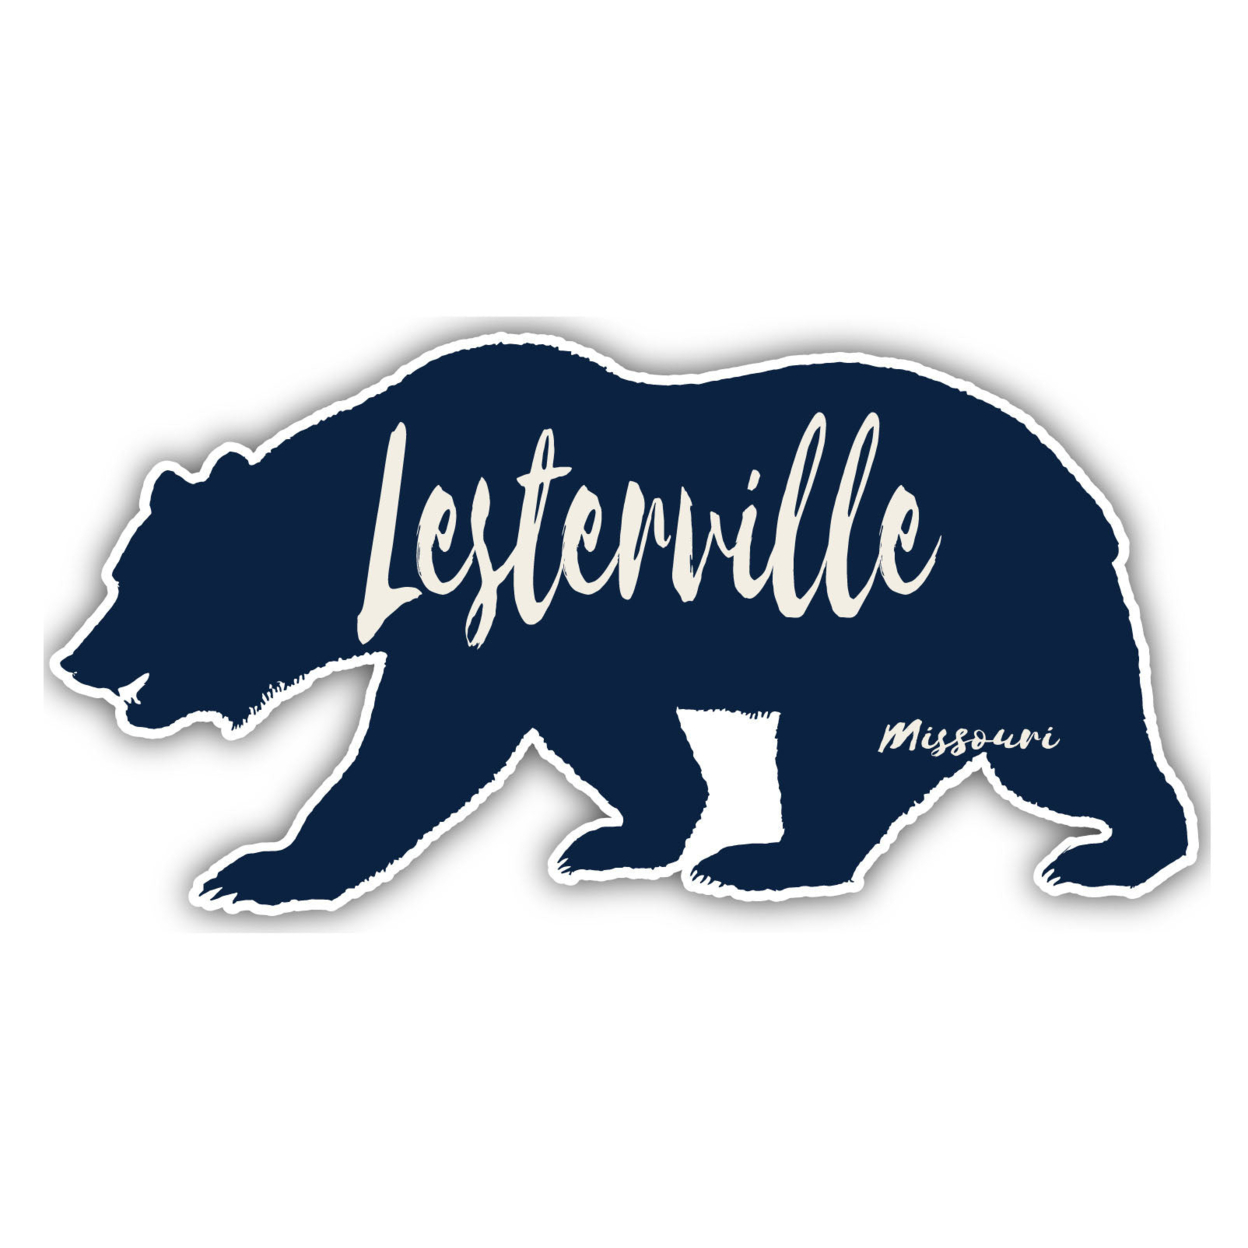 Lesterville Missouri Souvenir Decorative Stickers (Choose Theme And Size) - 4-Inch, Bear